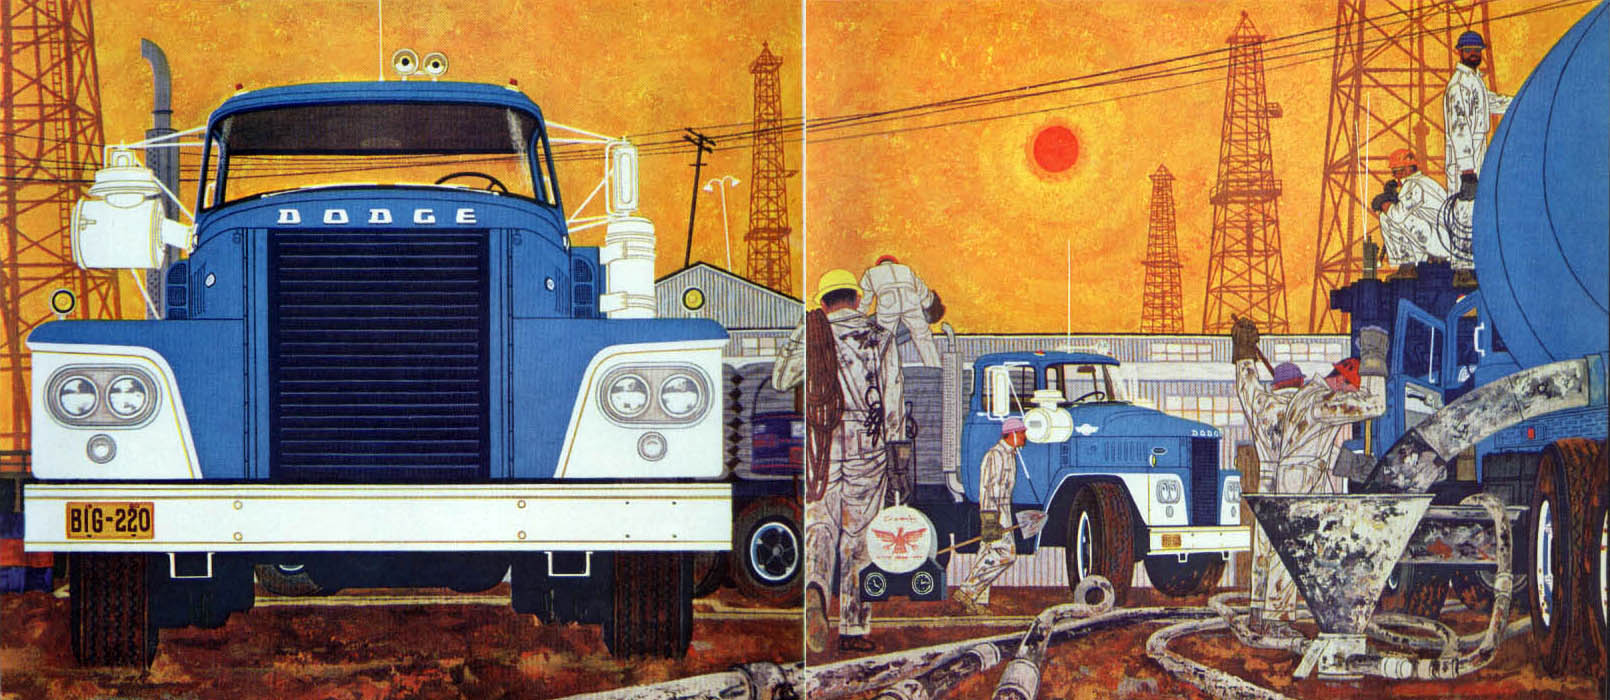 Dodge Trucks Advertising Art by Charles Wysocki (November, 1959) - Special-purpose models